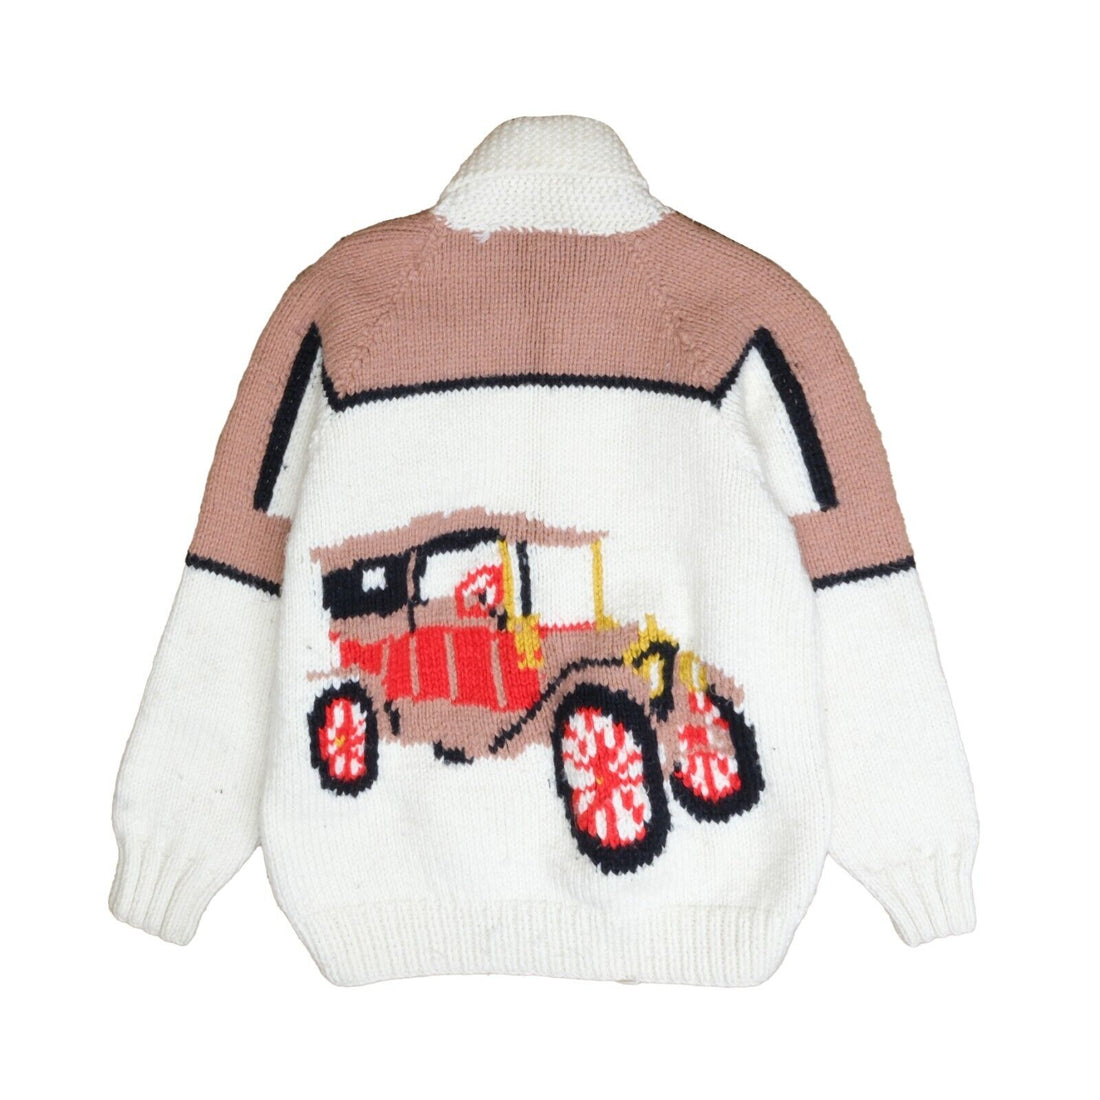 Vintage Wagon Wool Knit Cowichan Cardigan Sweater Size Medium